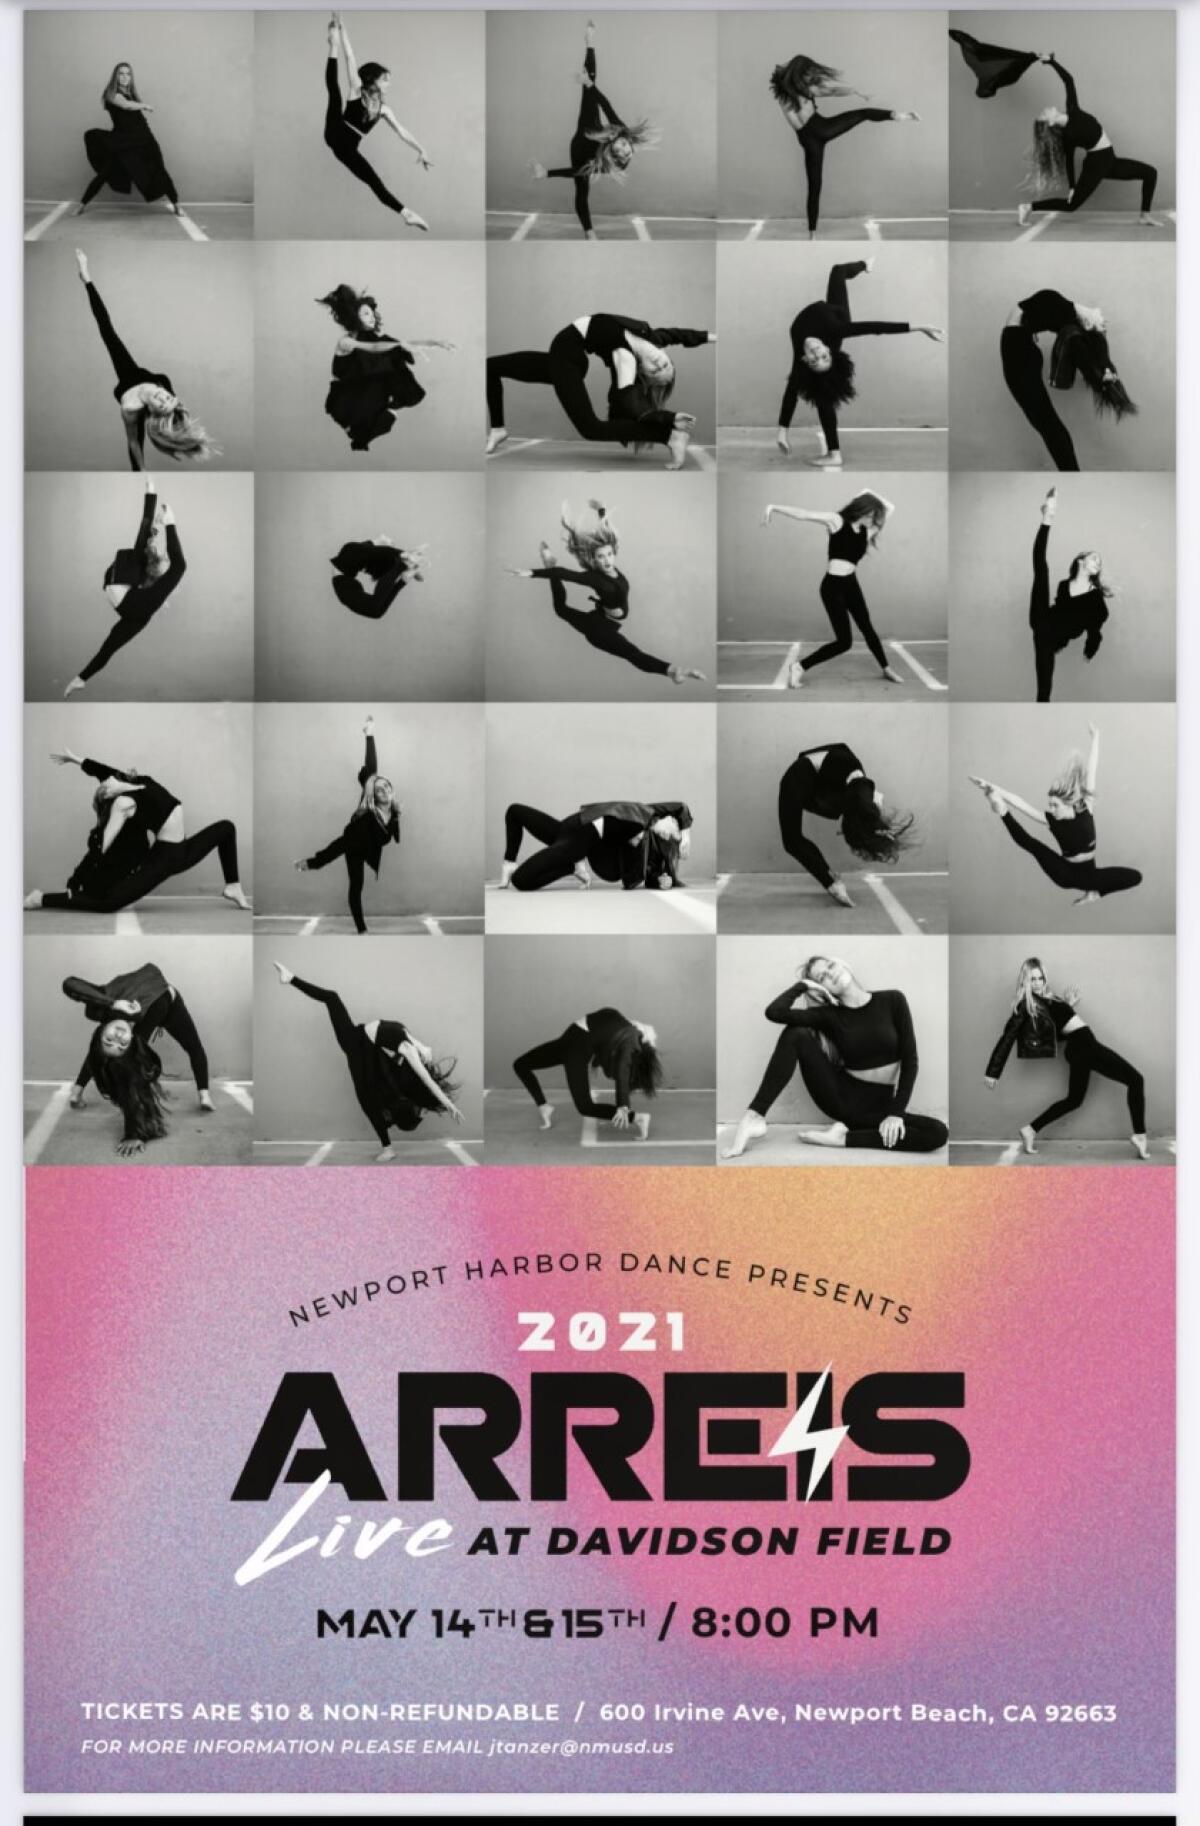 Newport Harbor's "ArreiS" dance program runs Friday and Saturday night.